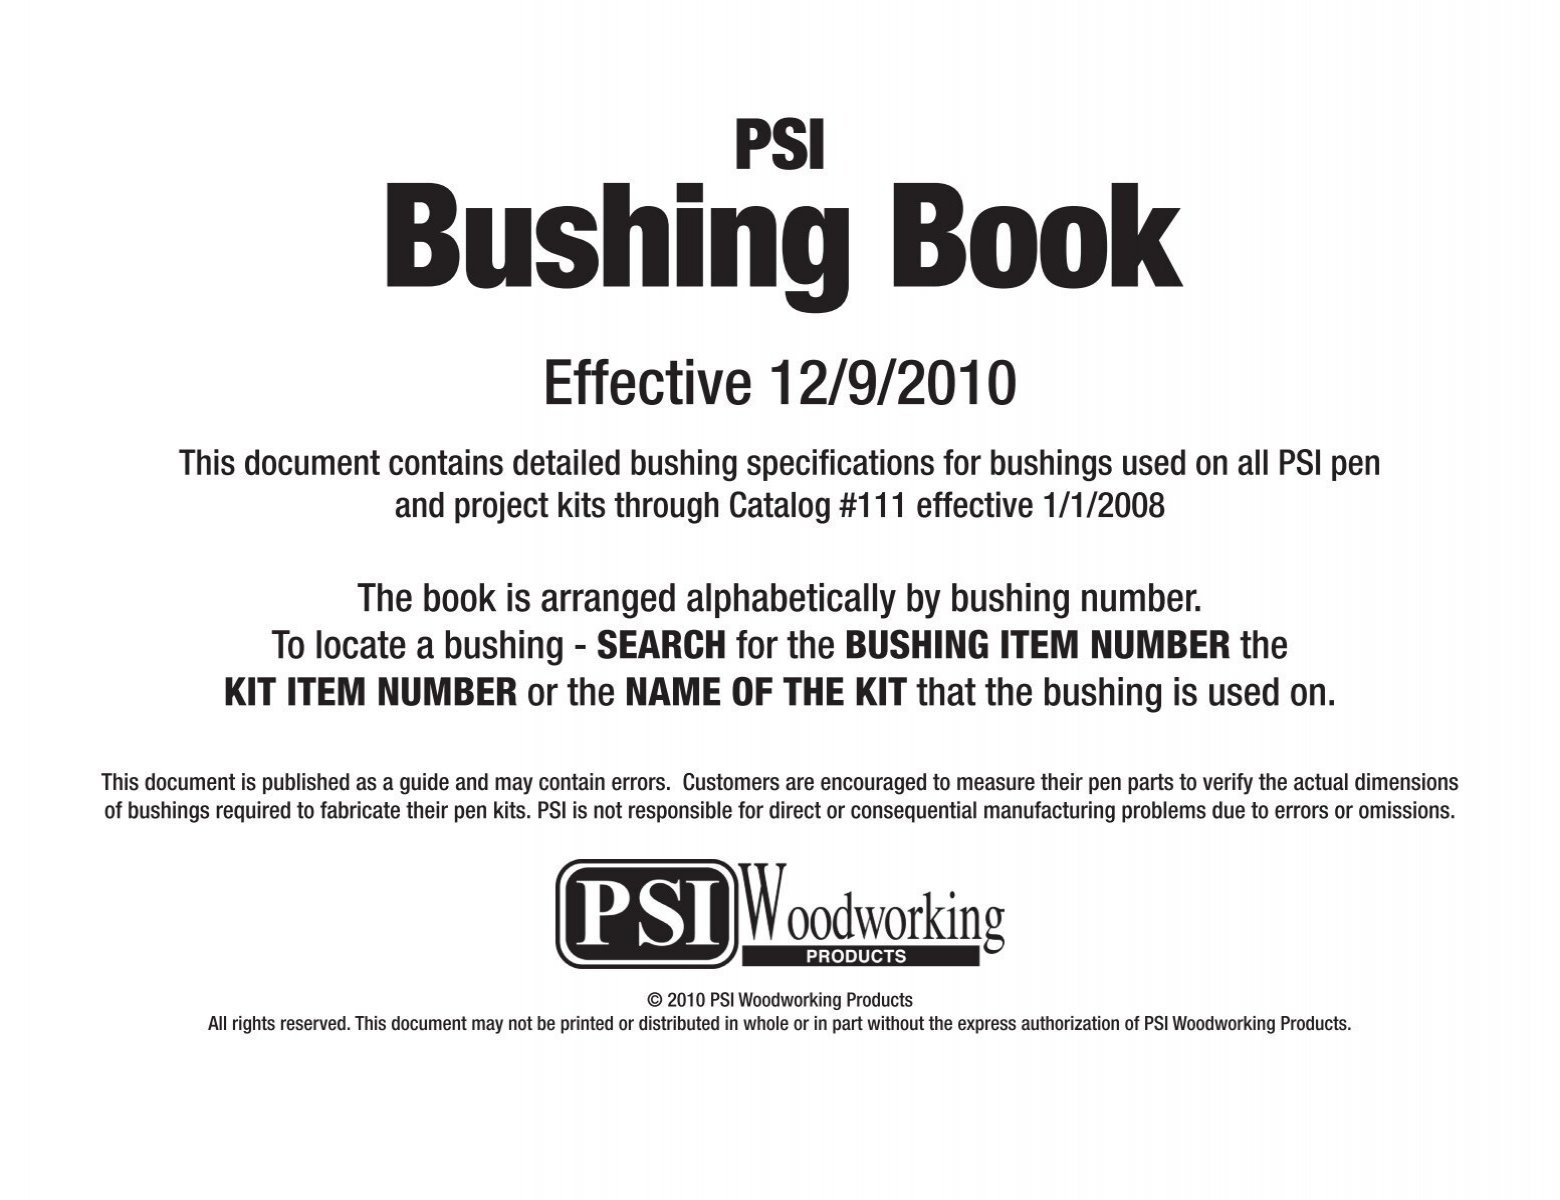 Bushings: Complete Book - Penn State Industries